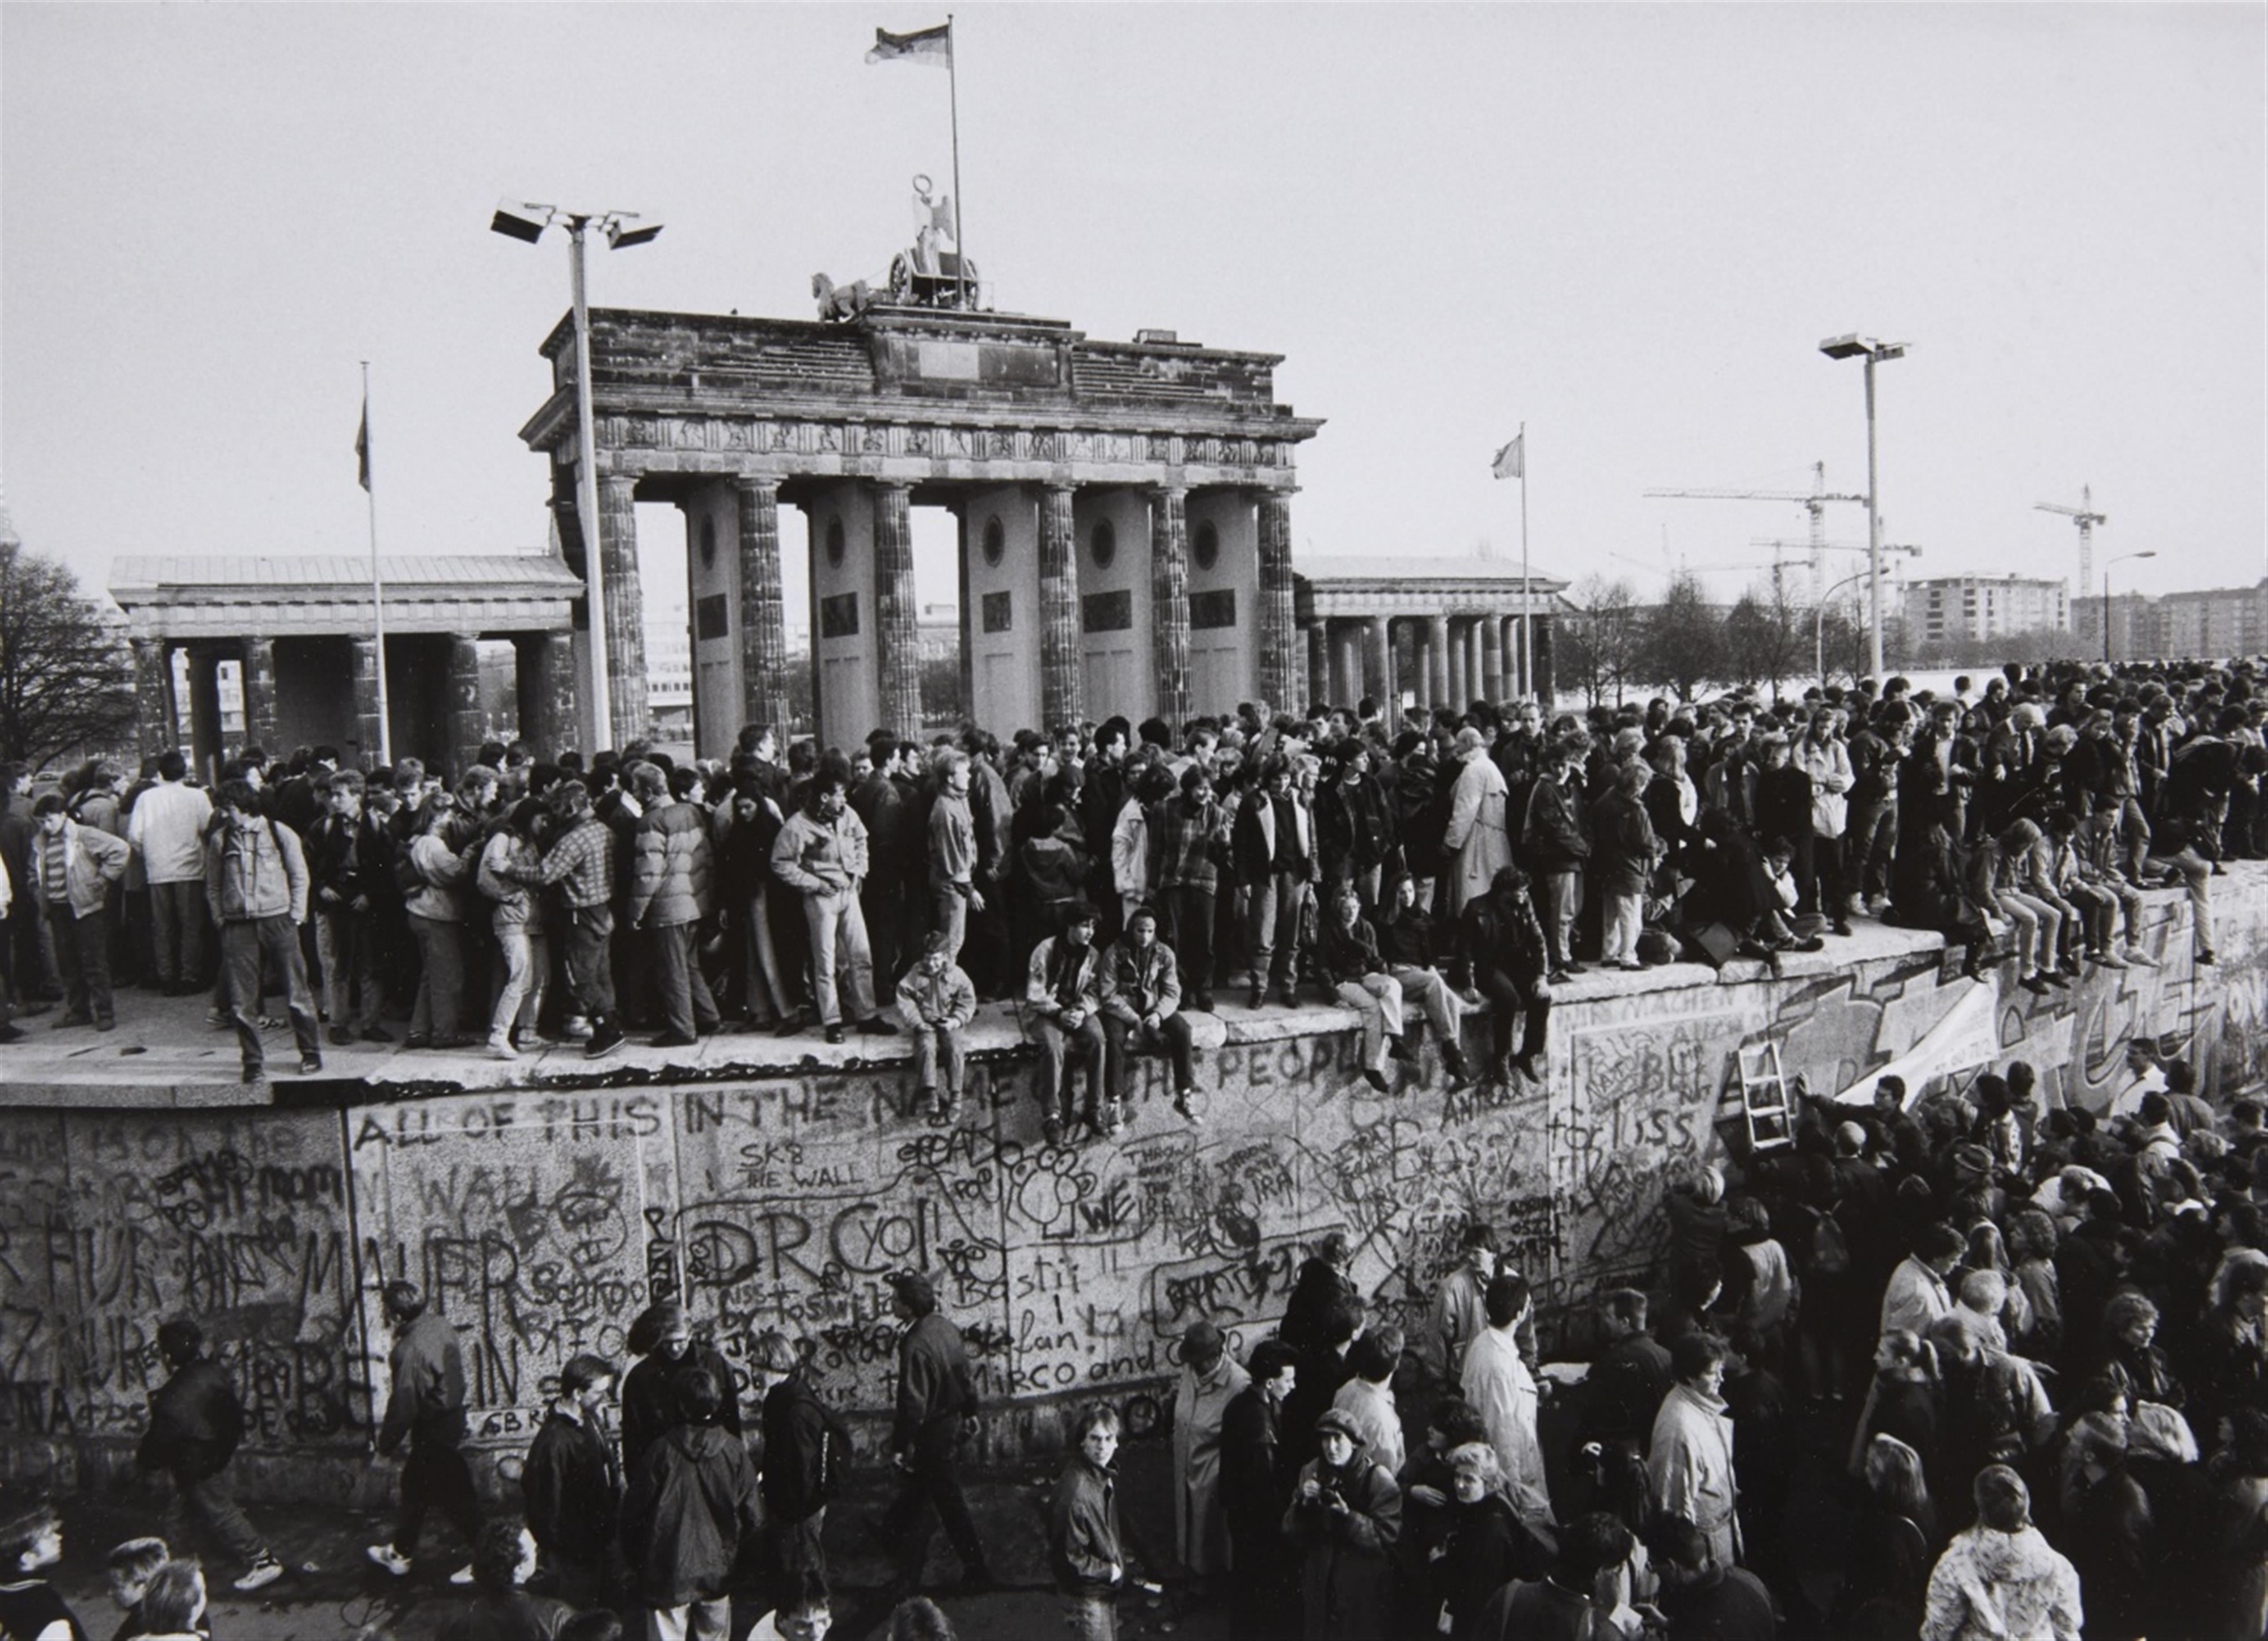 Barbara Klemm - Fall der Mauer. Brandenburger Tor, Berlin, 10. November 1989 - image-1